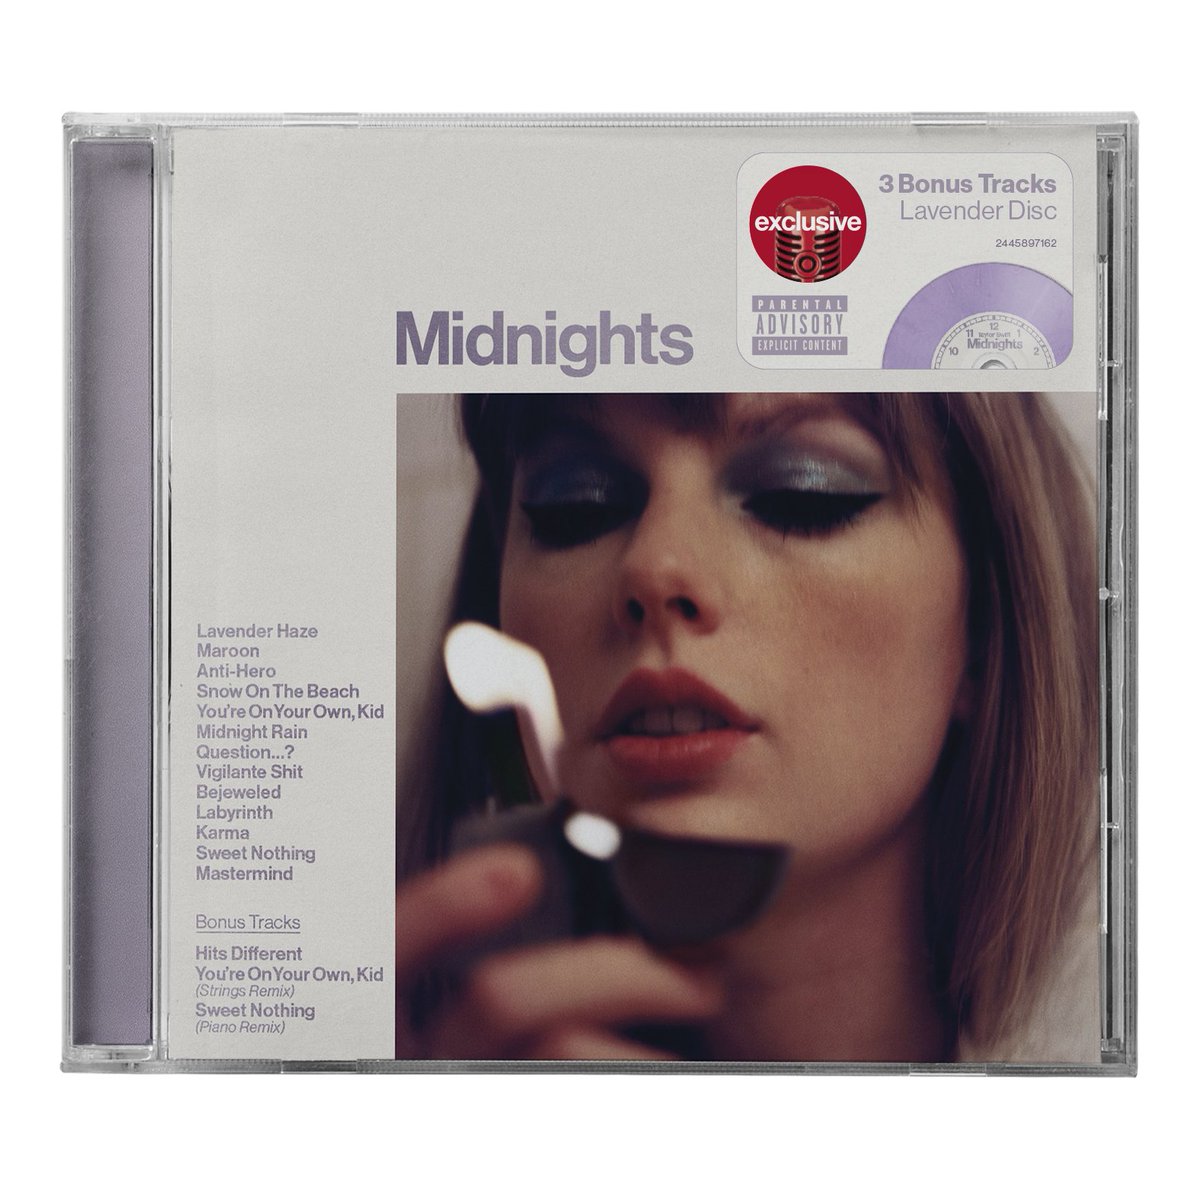 Midnights Mayhem hits different tonight 💜 Preorder Midnights Target exclusive edition CD including 3 bonus tracks now: tgt.biz/zjfjbb #TSmidnighTS